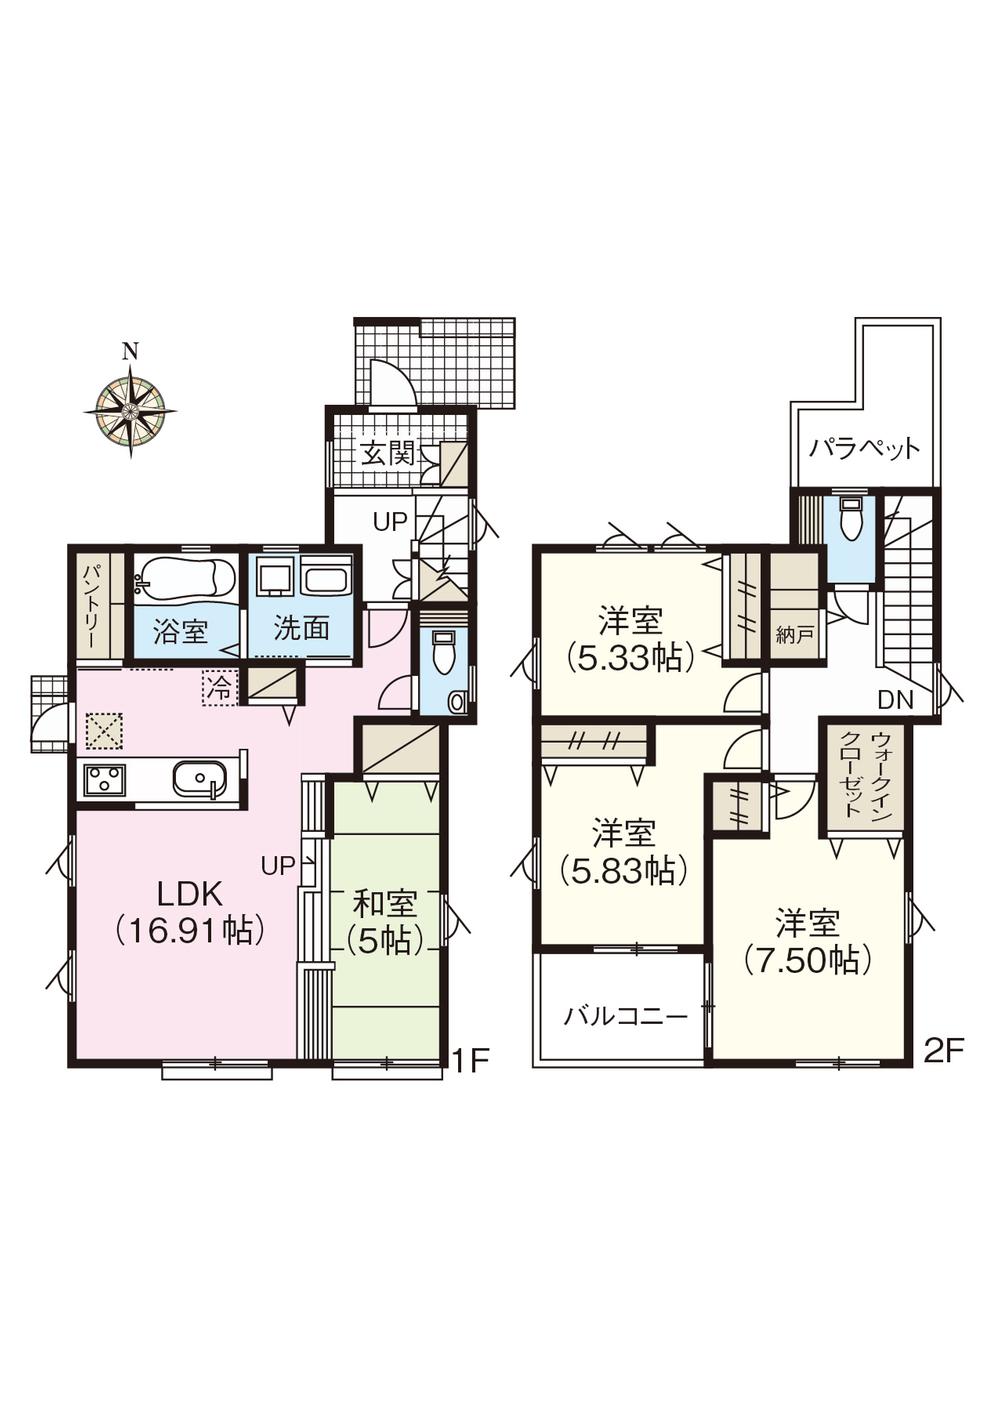 Floor plan. (1 Building), Price 31.5 million yen, 3LDK, Land area 124.63 sq m , Building area 101.07 sq m